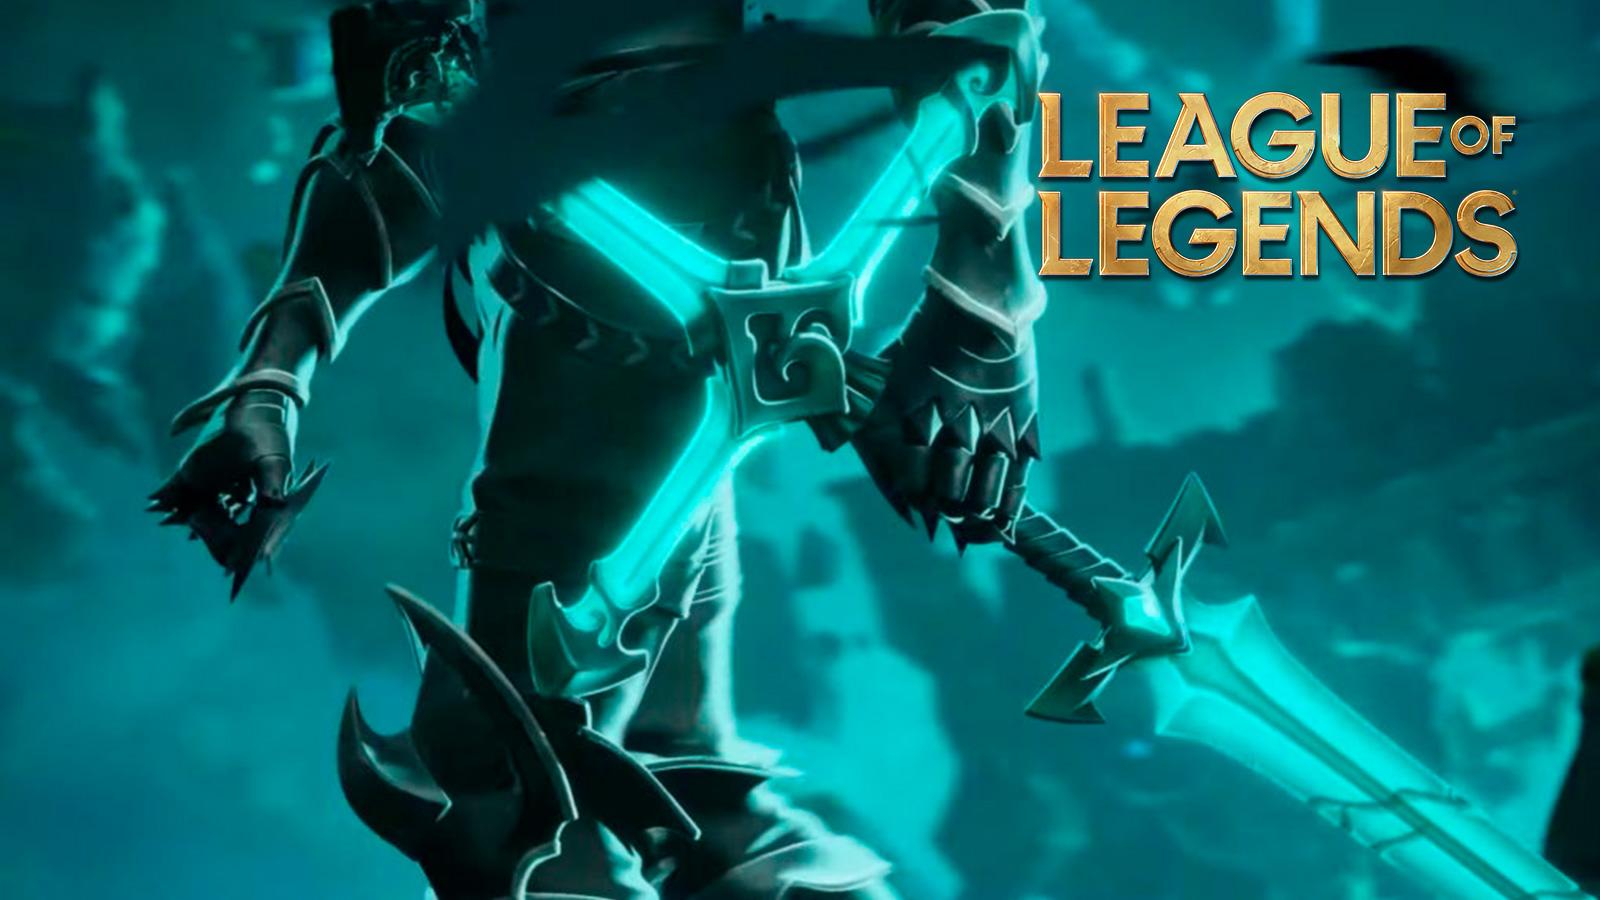 Viego League of Legends